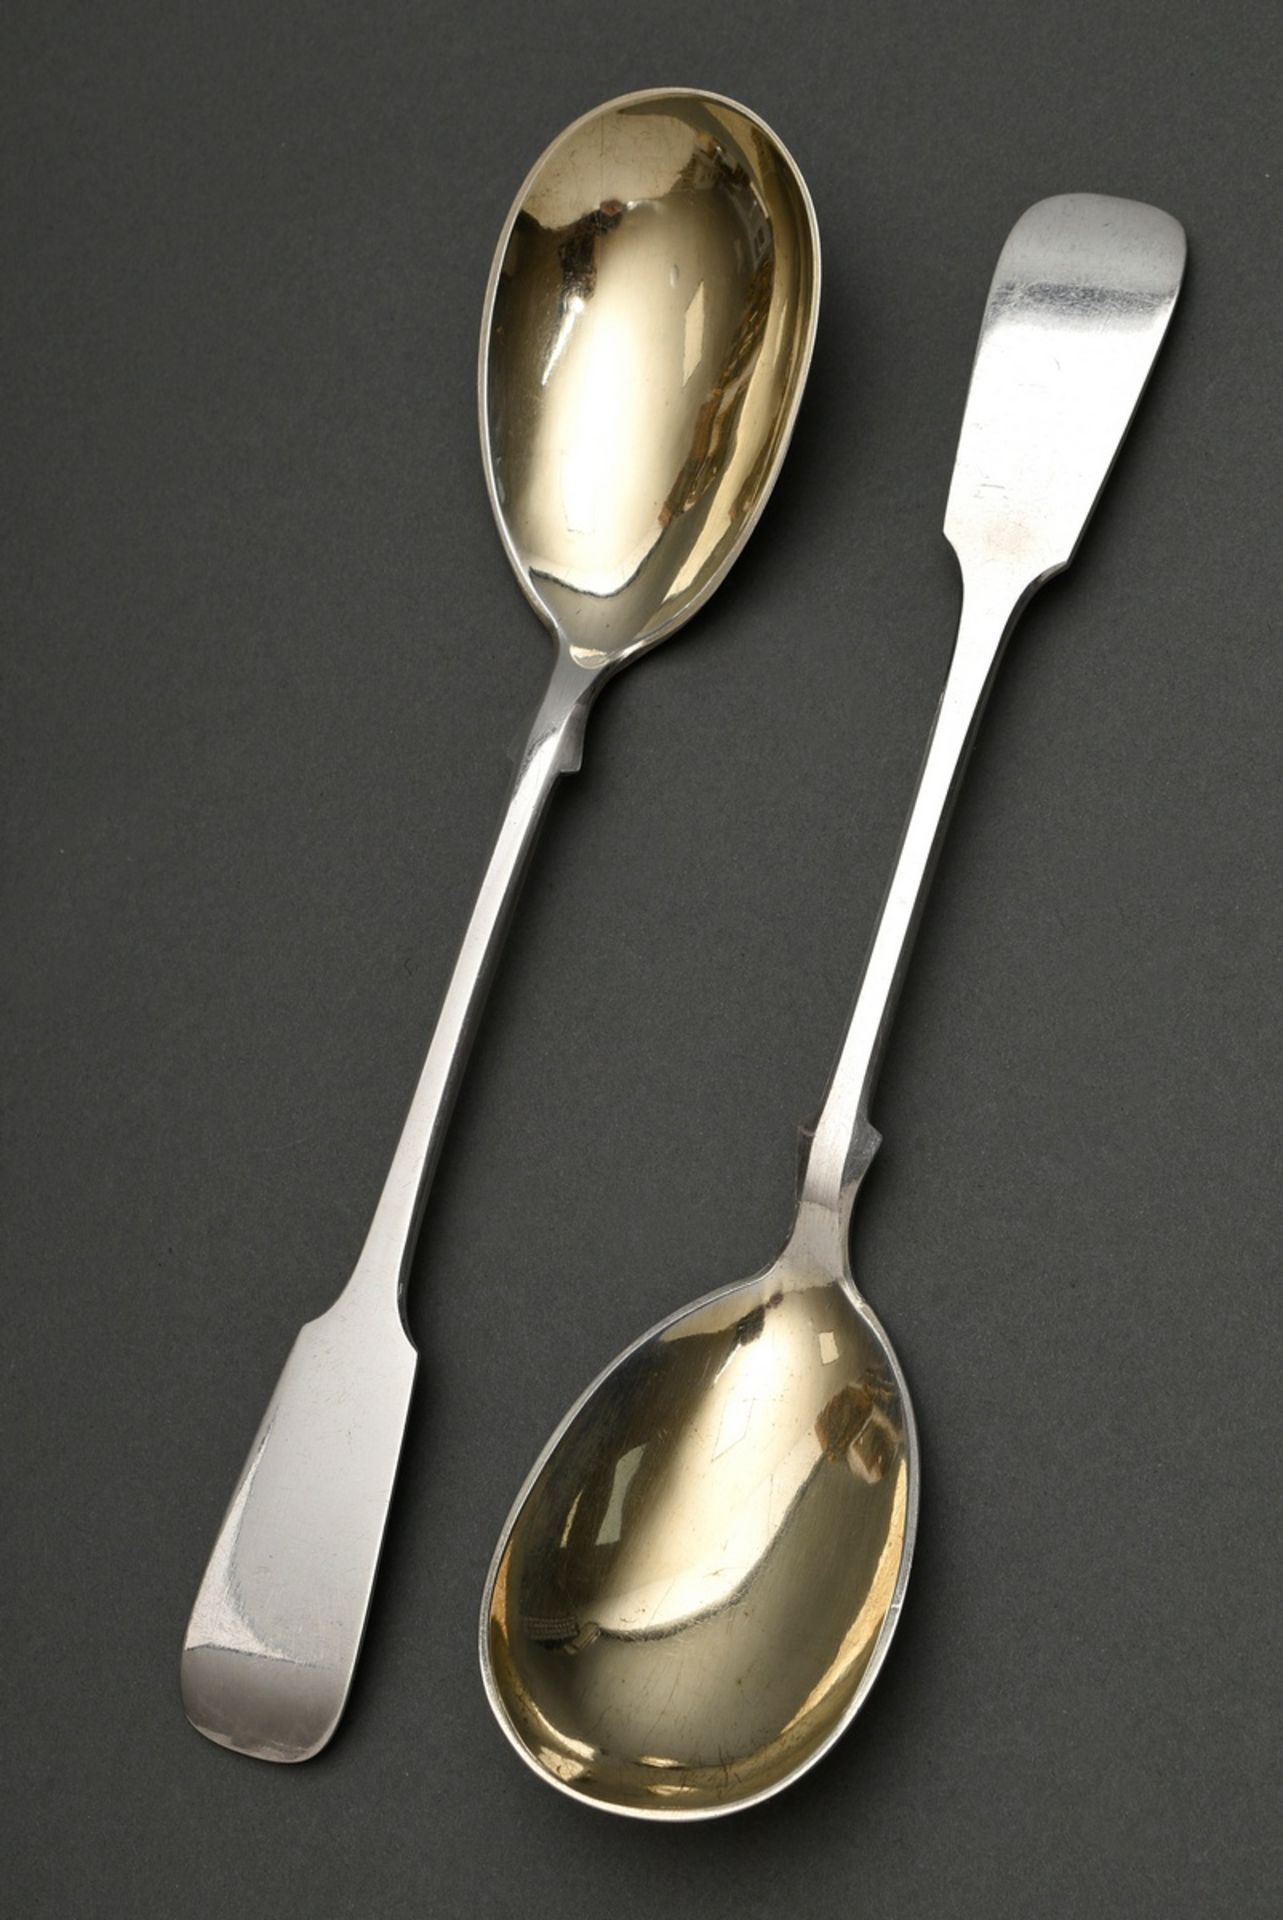 Pair of serving spoons "spade pattern " with gilded scoop, uninterpreted maker's mark, jeweller's m